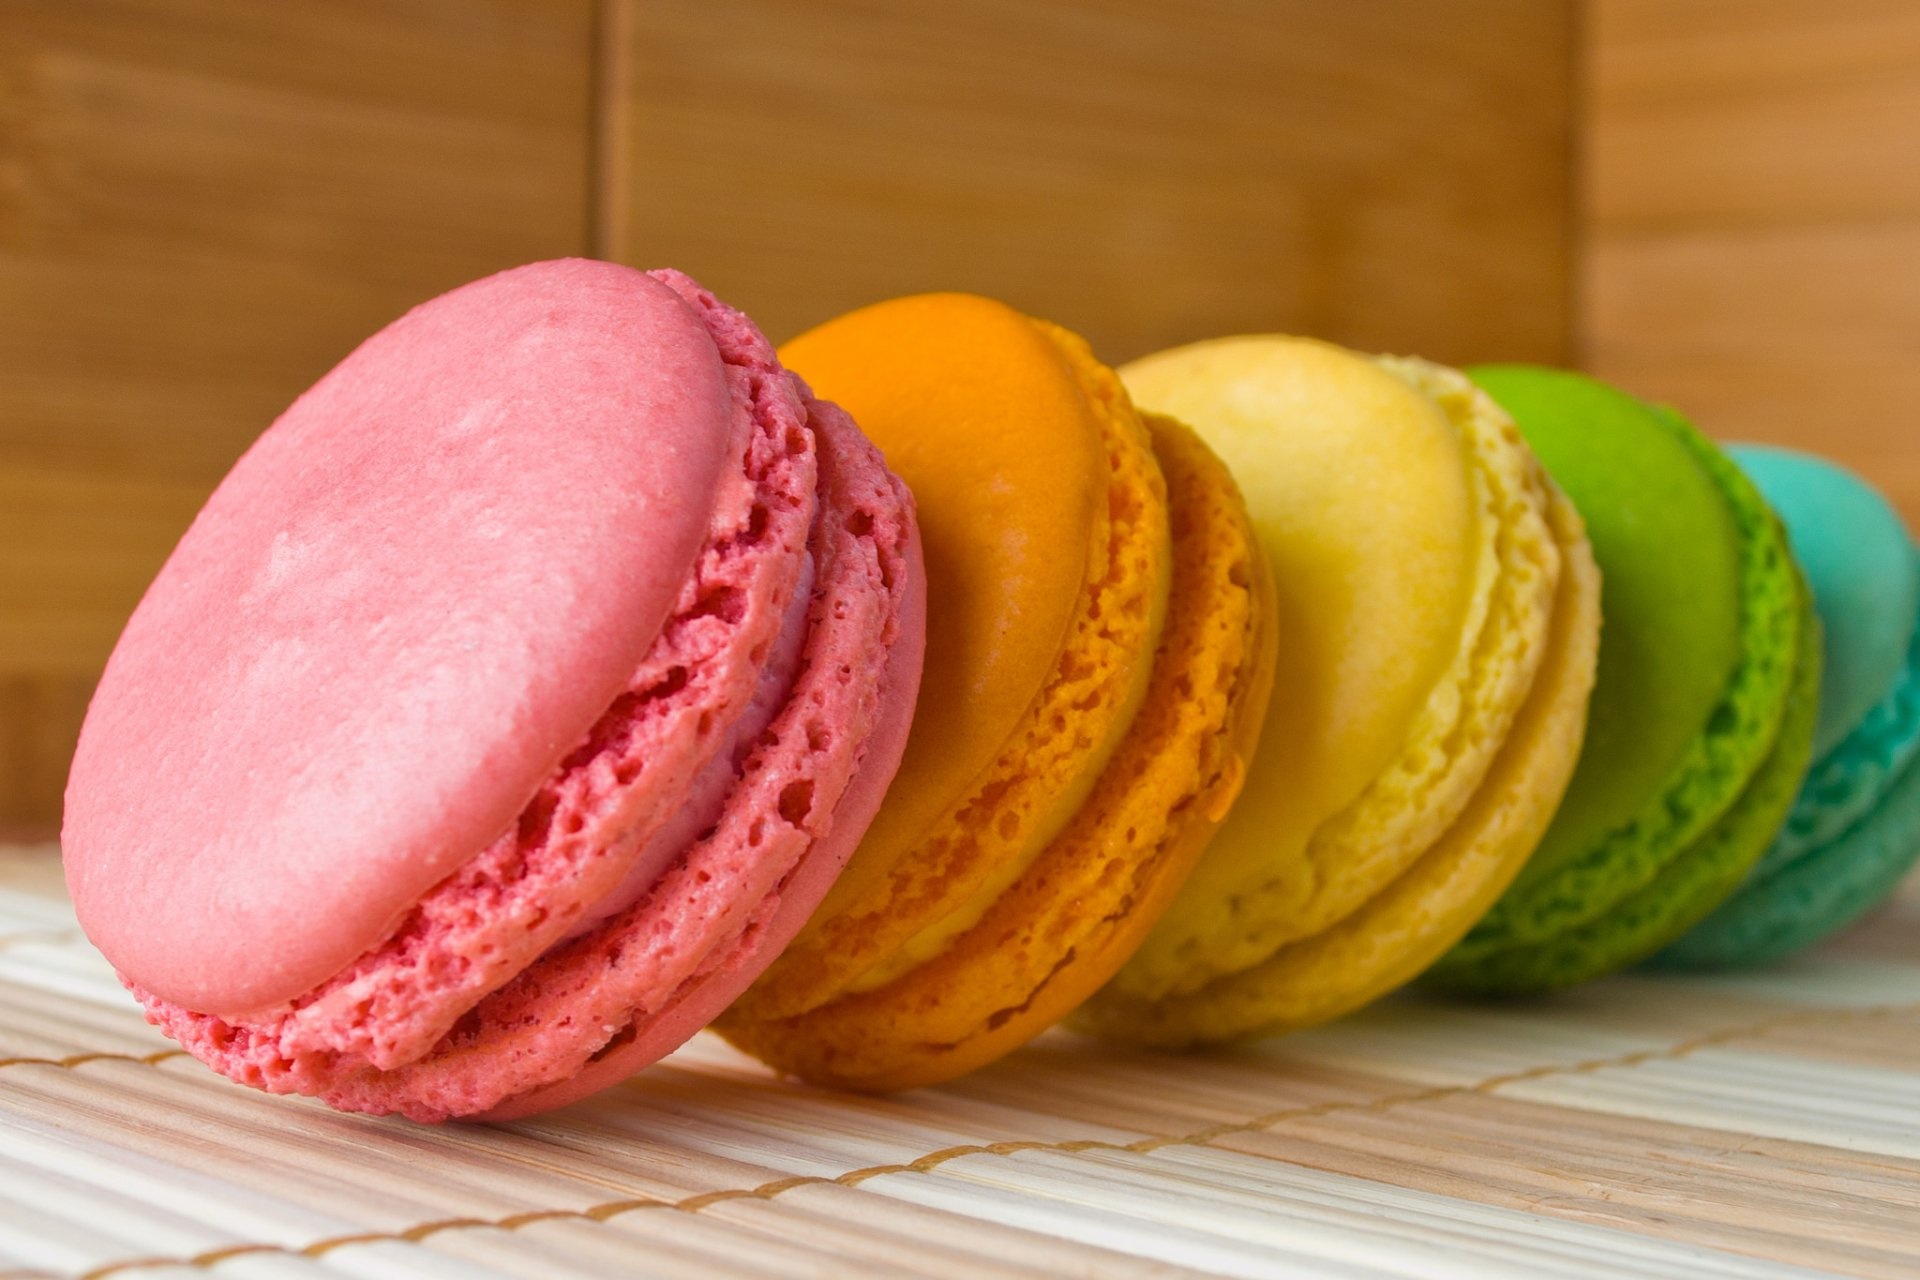 Macaron: The colorful varieties, known as Paris macarons. 1920x1280 HD Wallpaper.